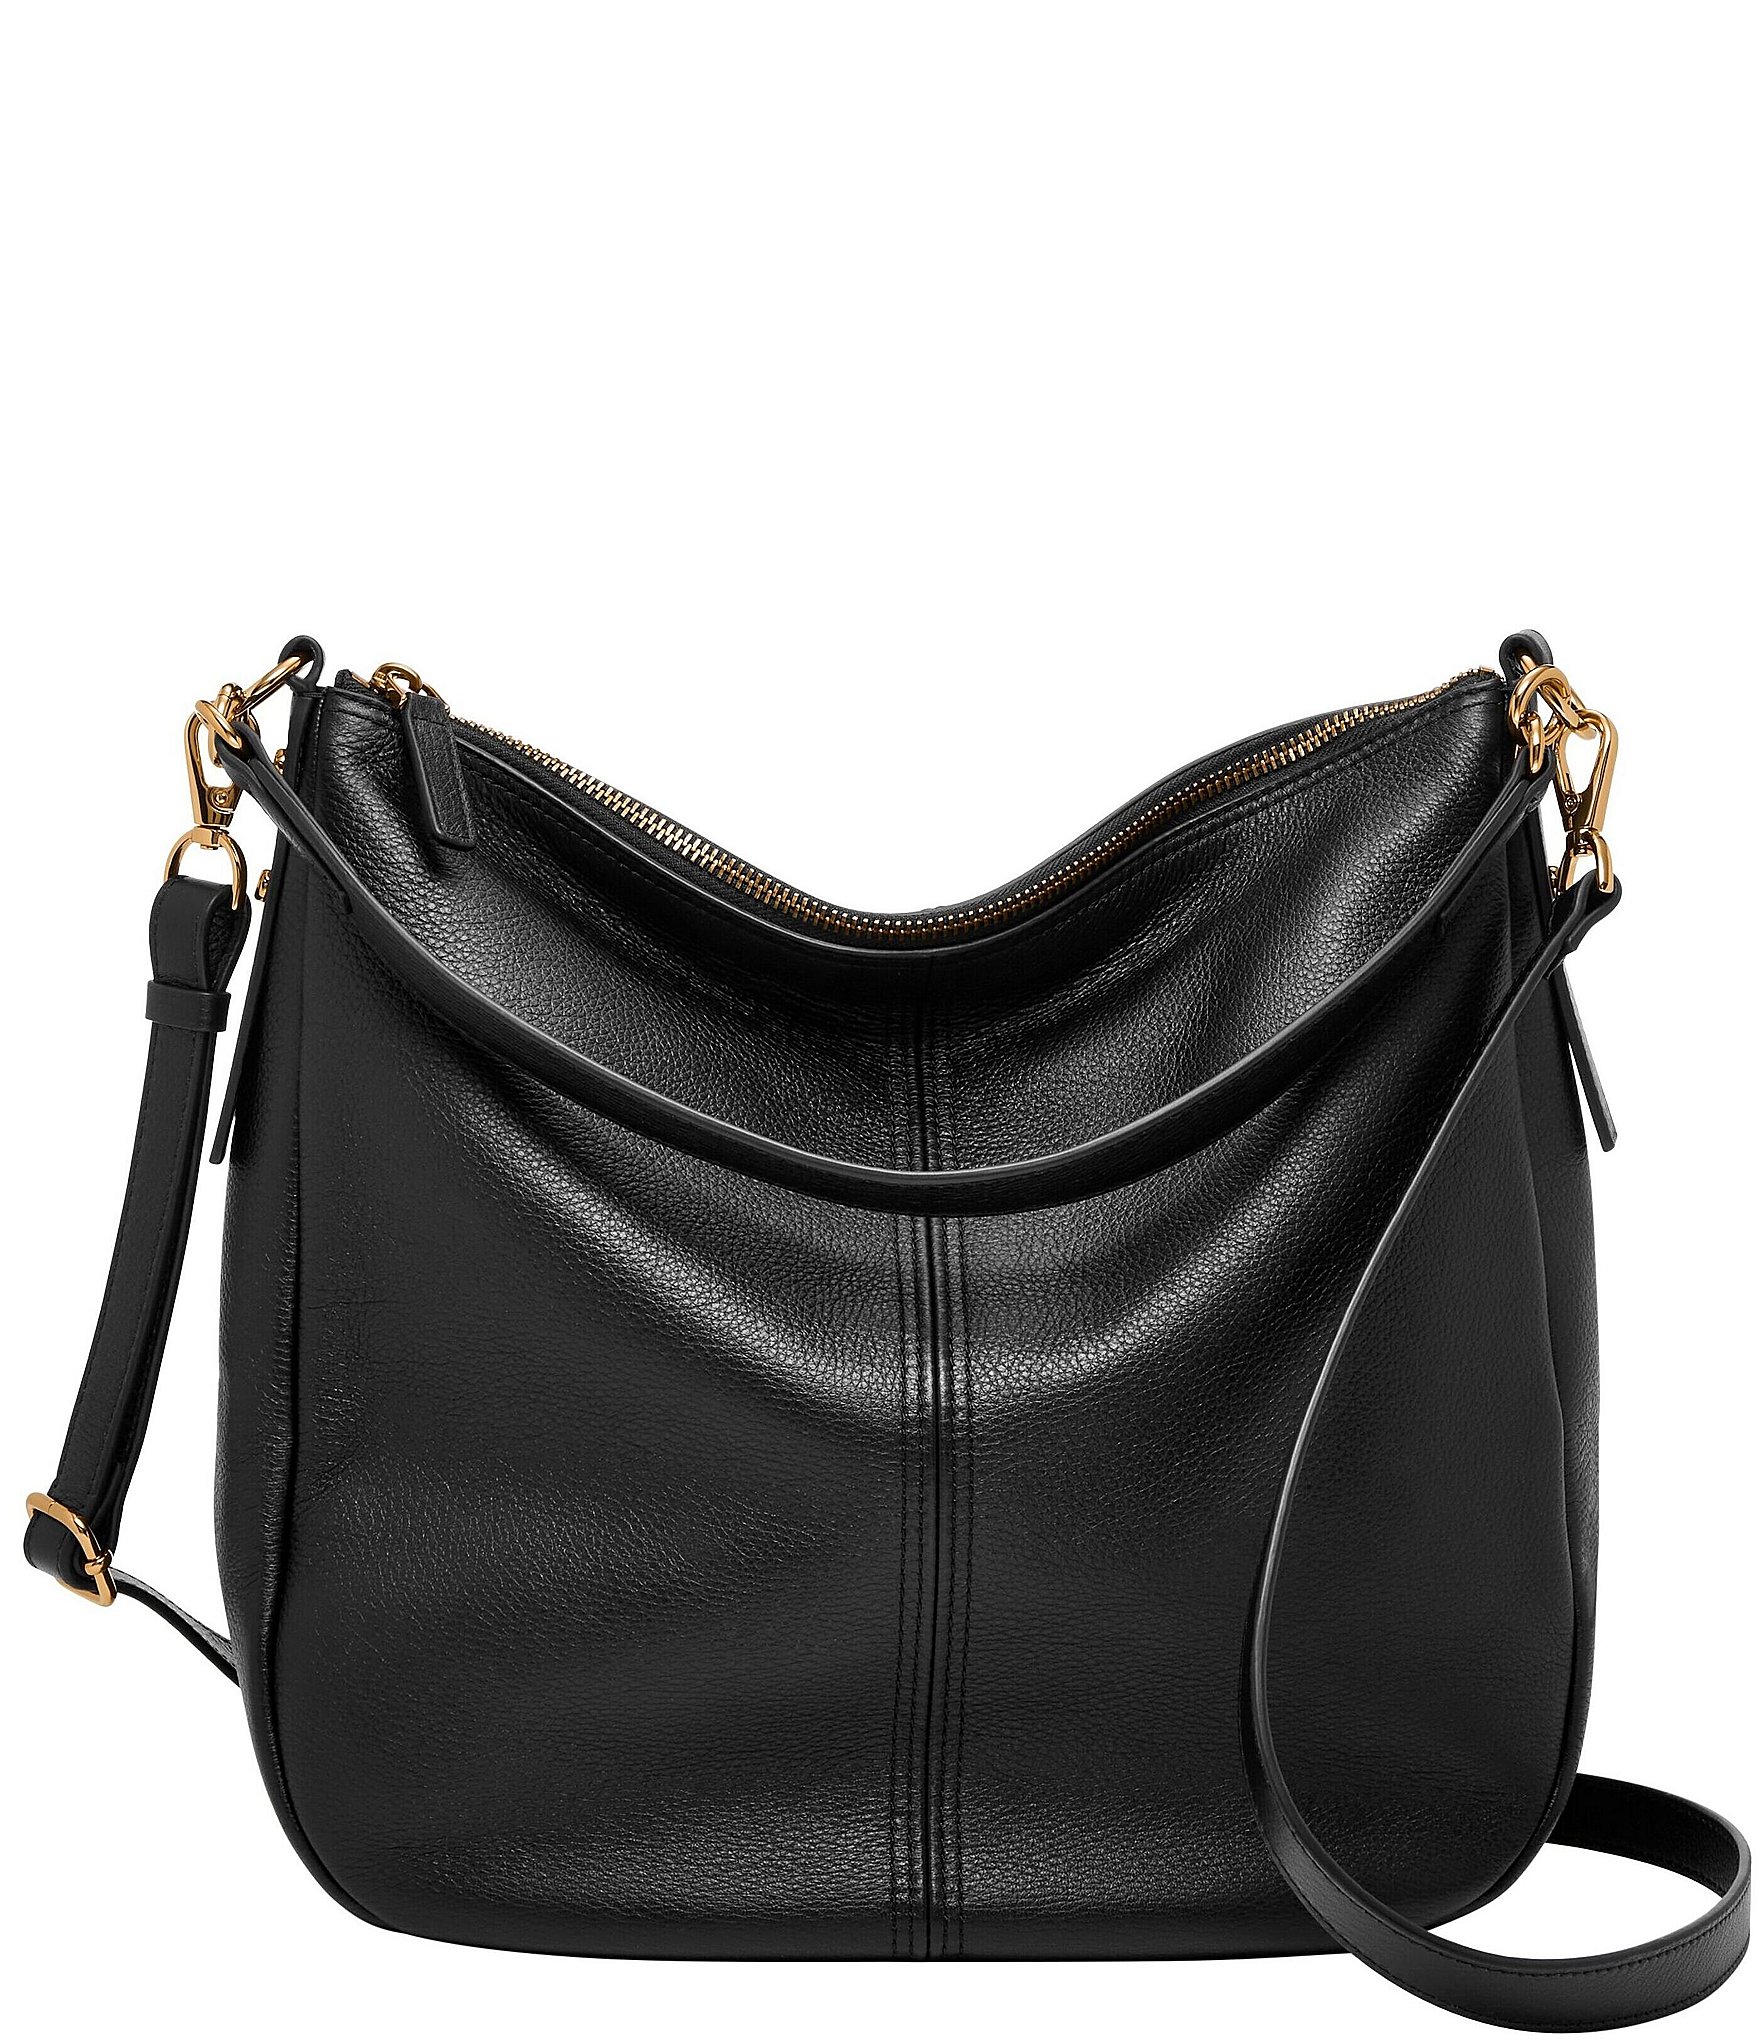 Buy Yellow Handbags for Women by Mochi Online | Ajio.com